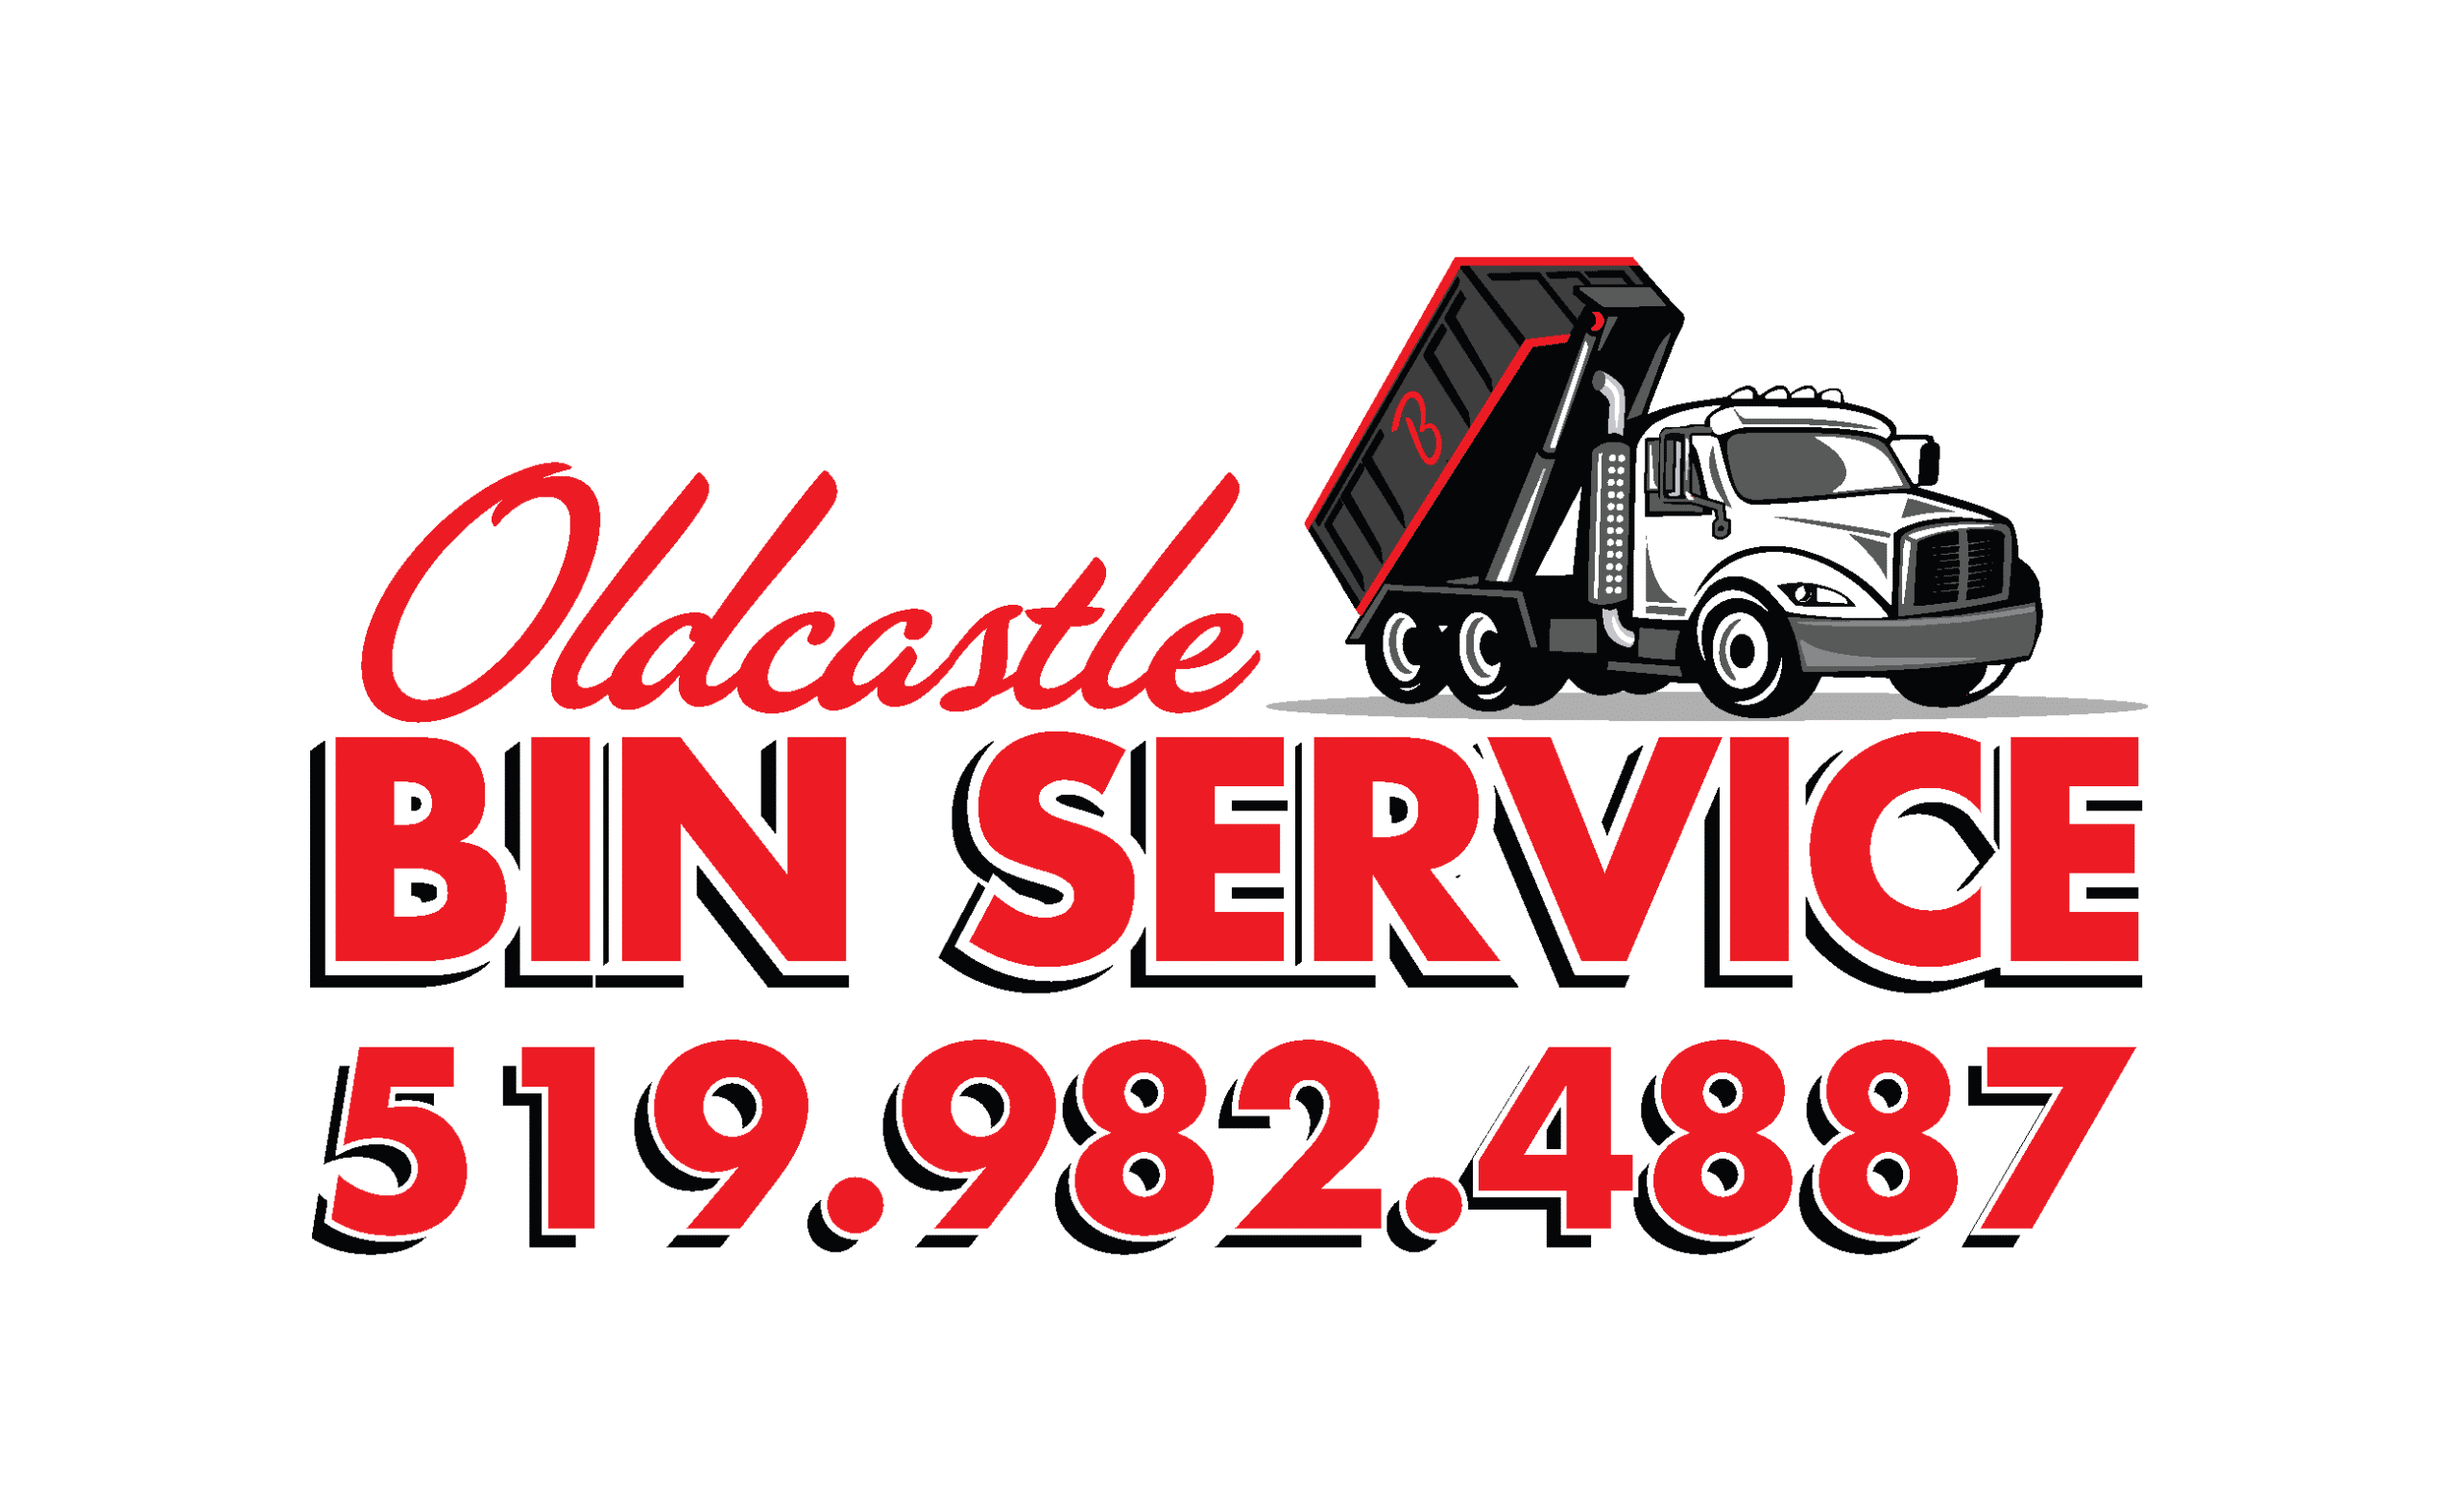 Oldcastle Bin Service